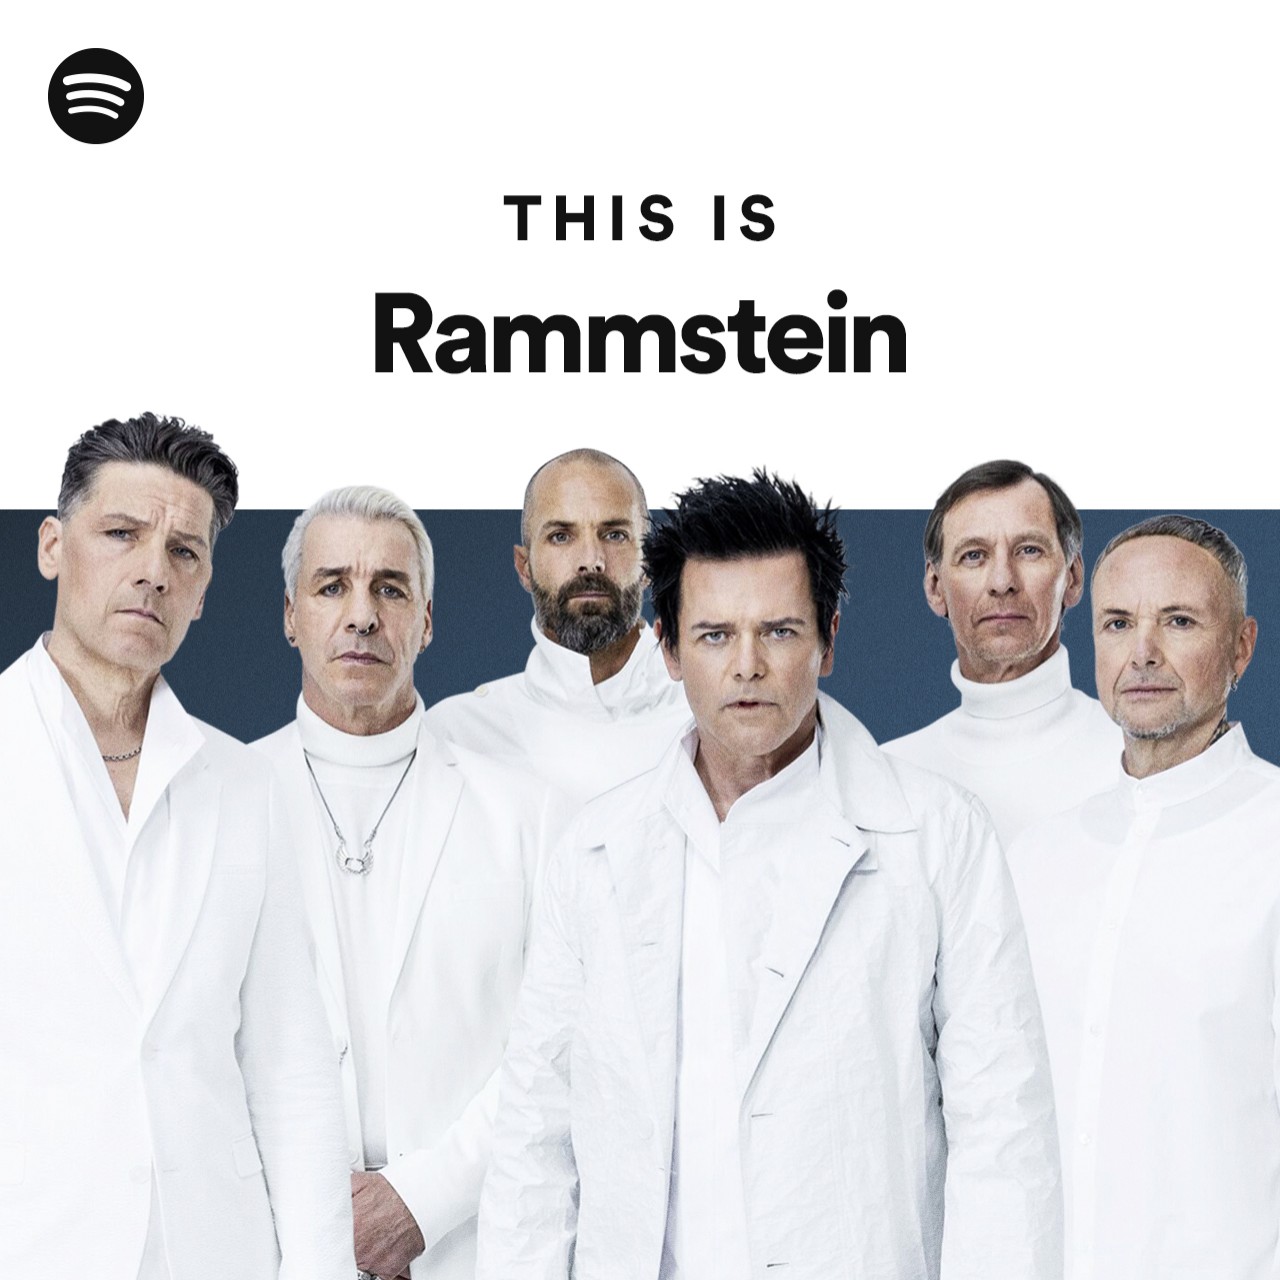 Rammstein swp1082